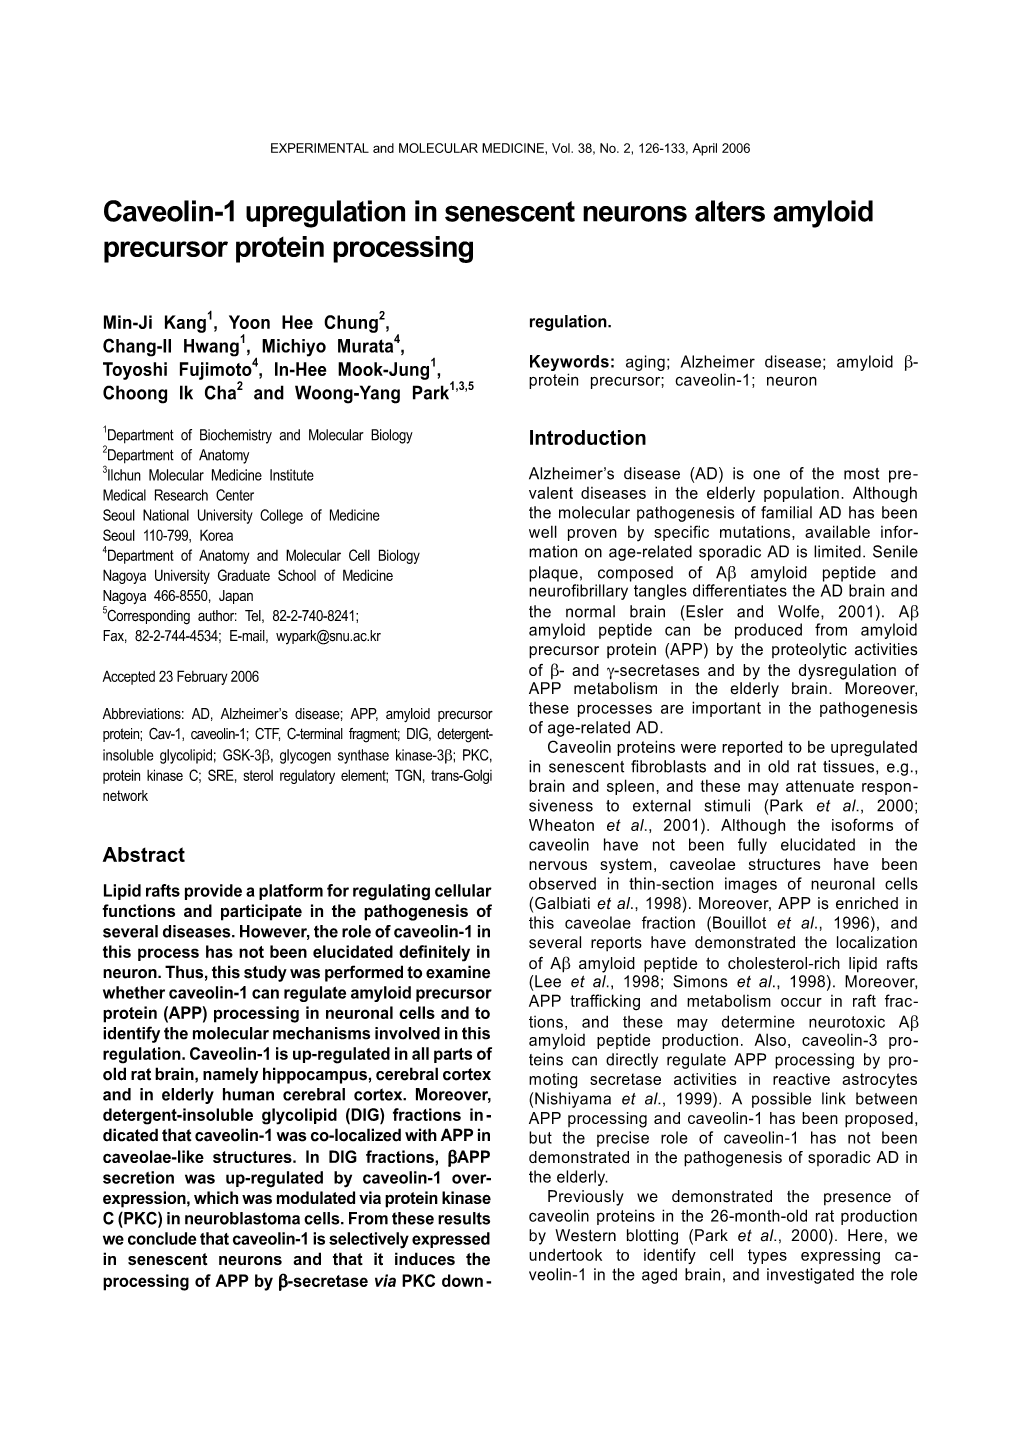 Caveolin-1 Upregulation in Senescent Neurons Alters Amyloid Precursor Protein Processing